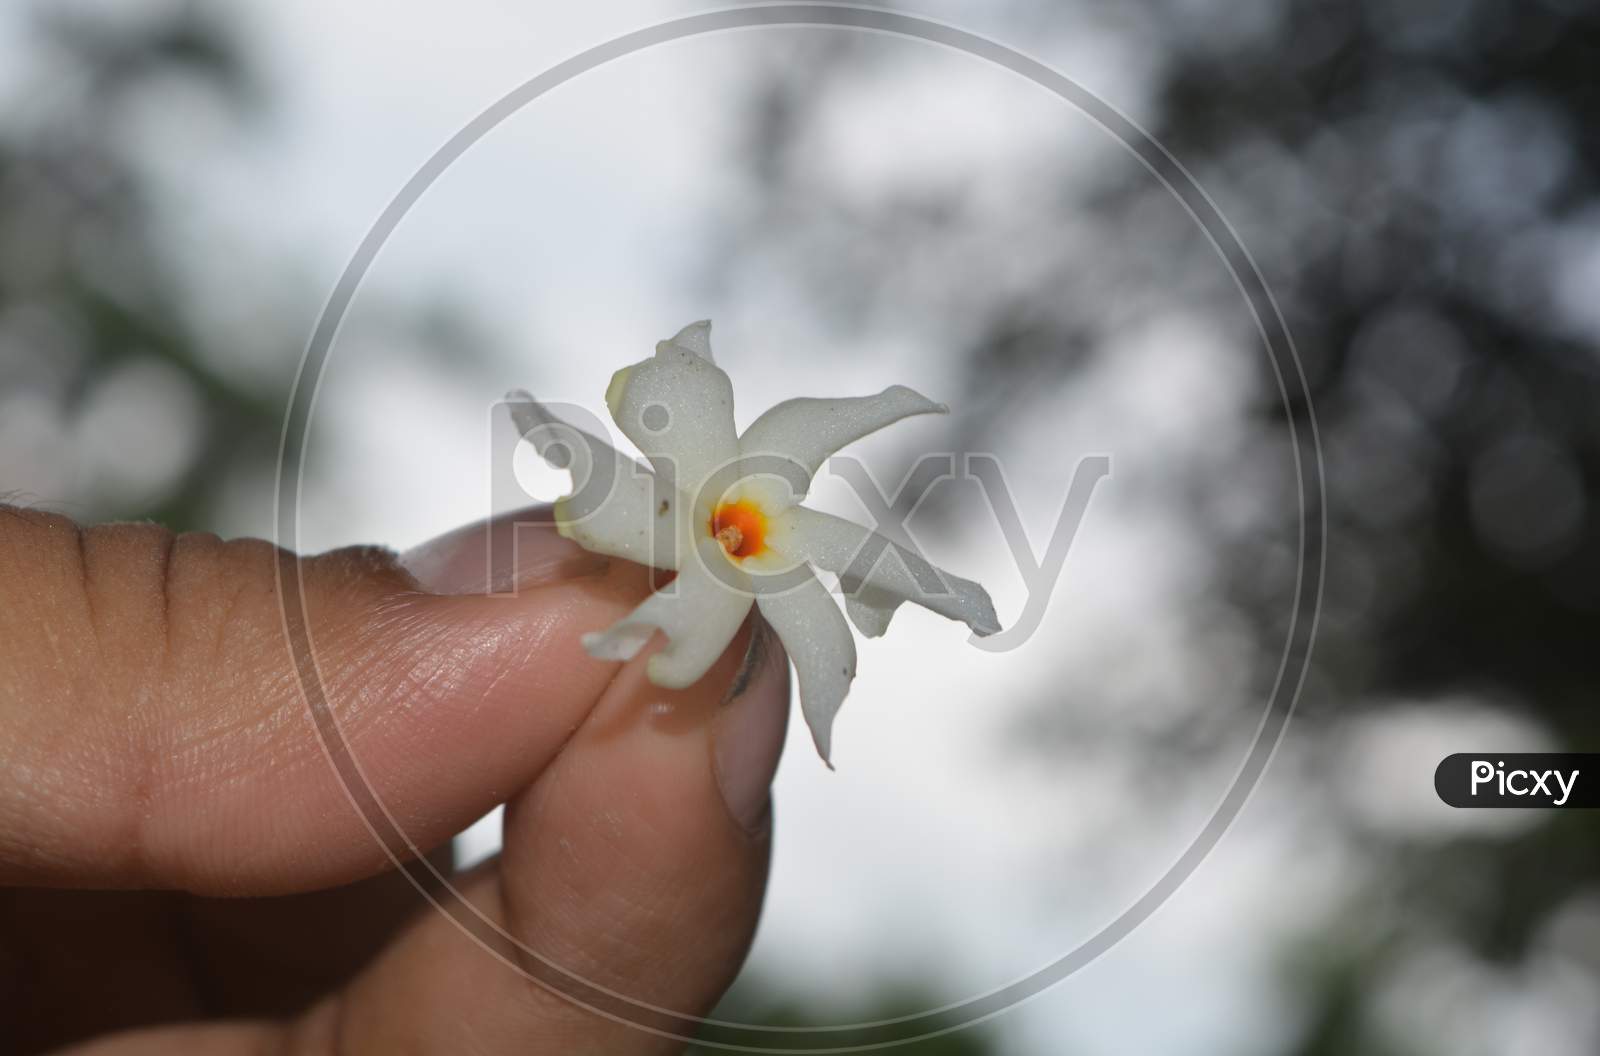 A seasonal flower of Assam, India.